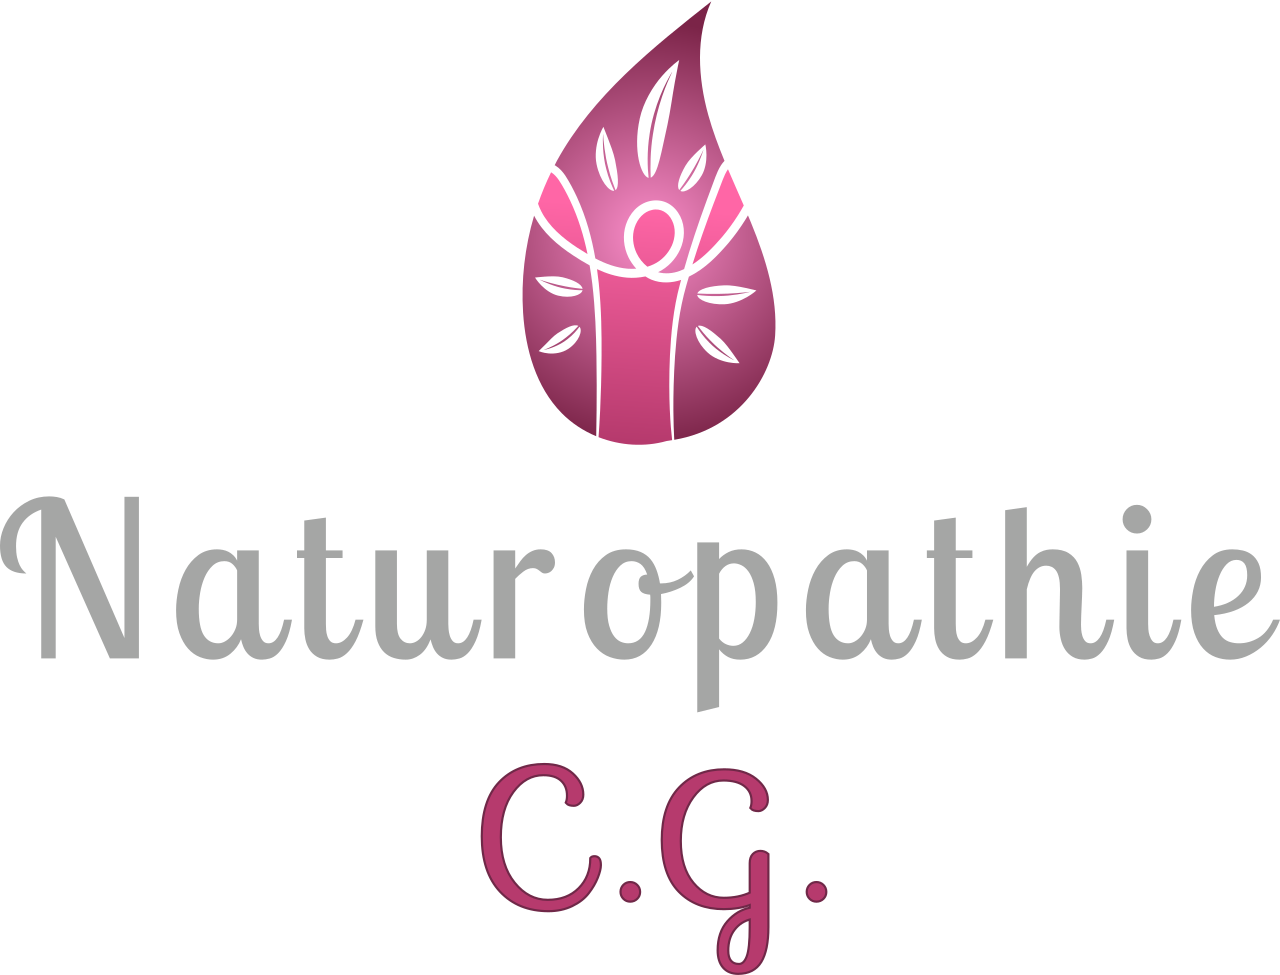 Naturopathie C.G.'s logo